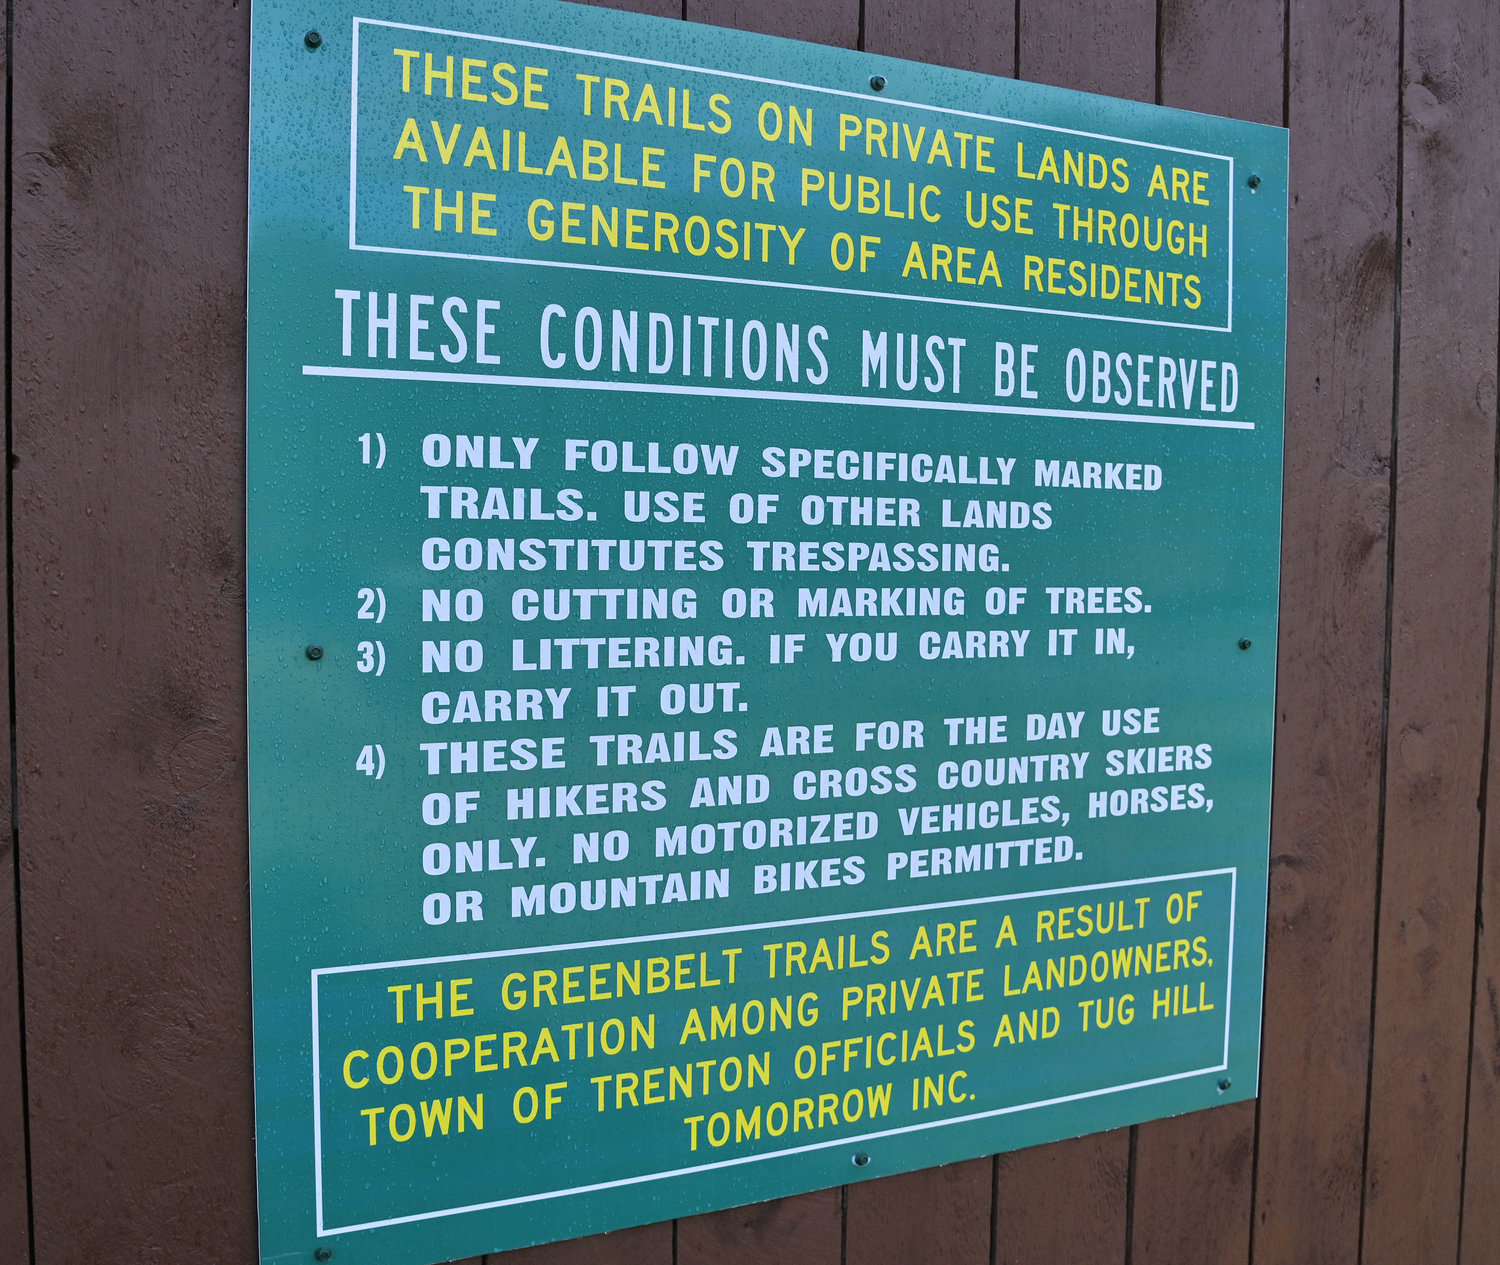 Sign at the Trenton Greenbelt Trails shelter Thursday, January 5, 2023.